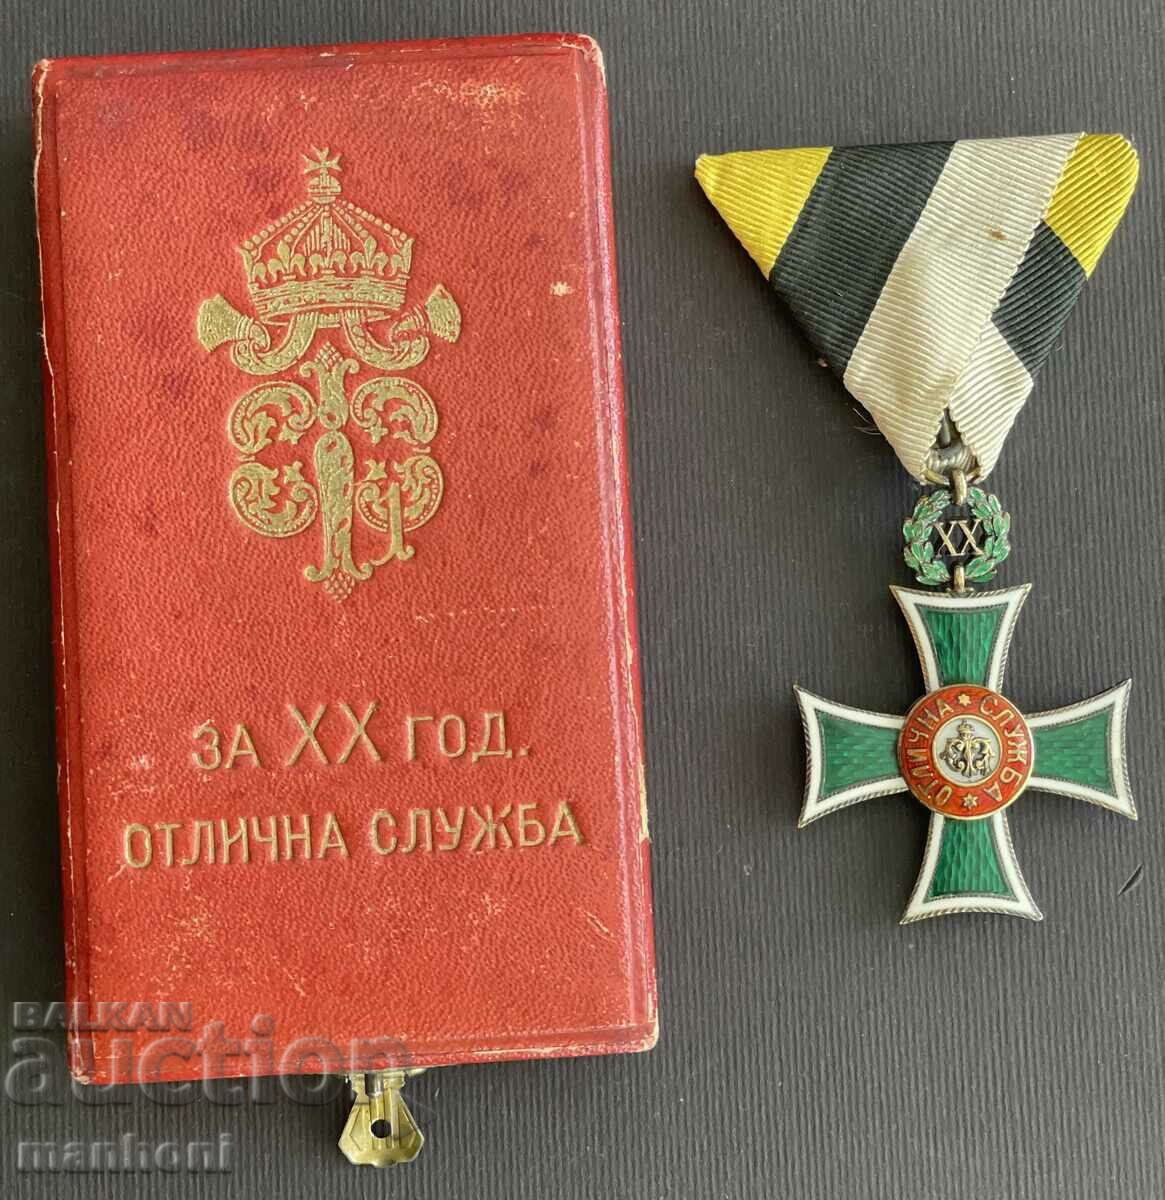 5678 Kingdom of Bulgaria token For 20 years Excellent service Tsar Ferdina